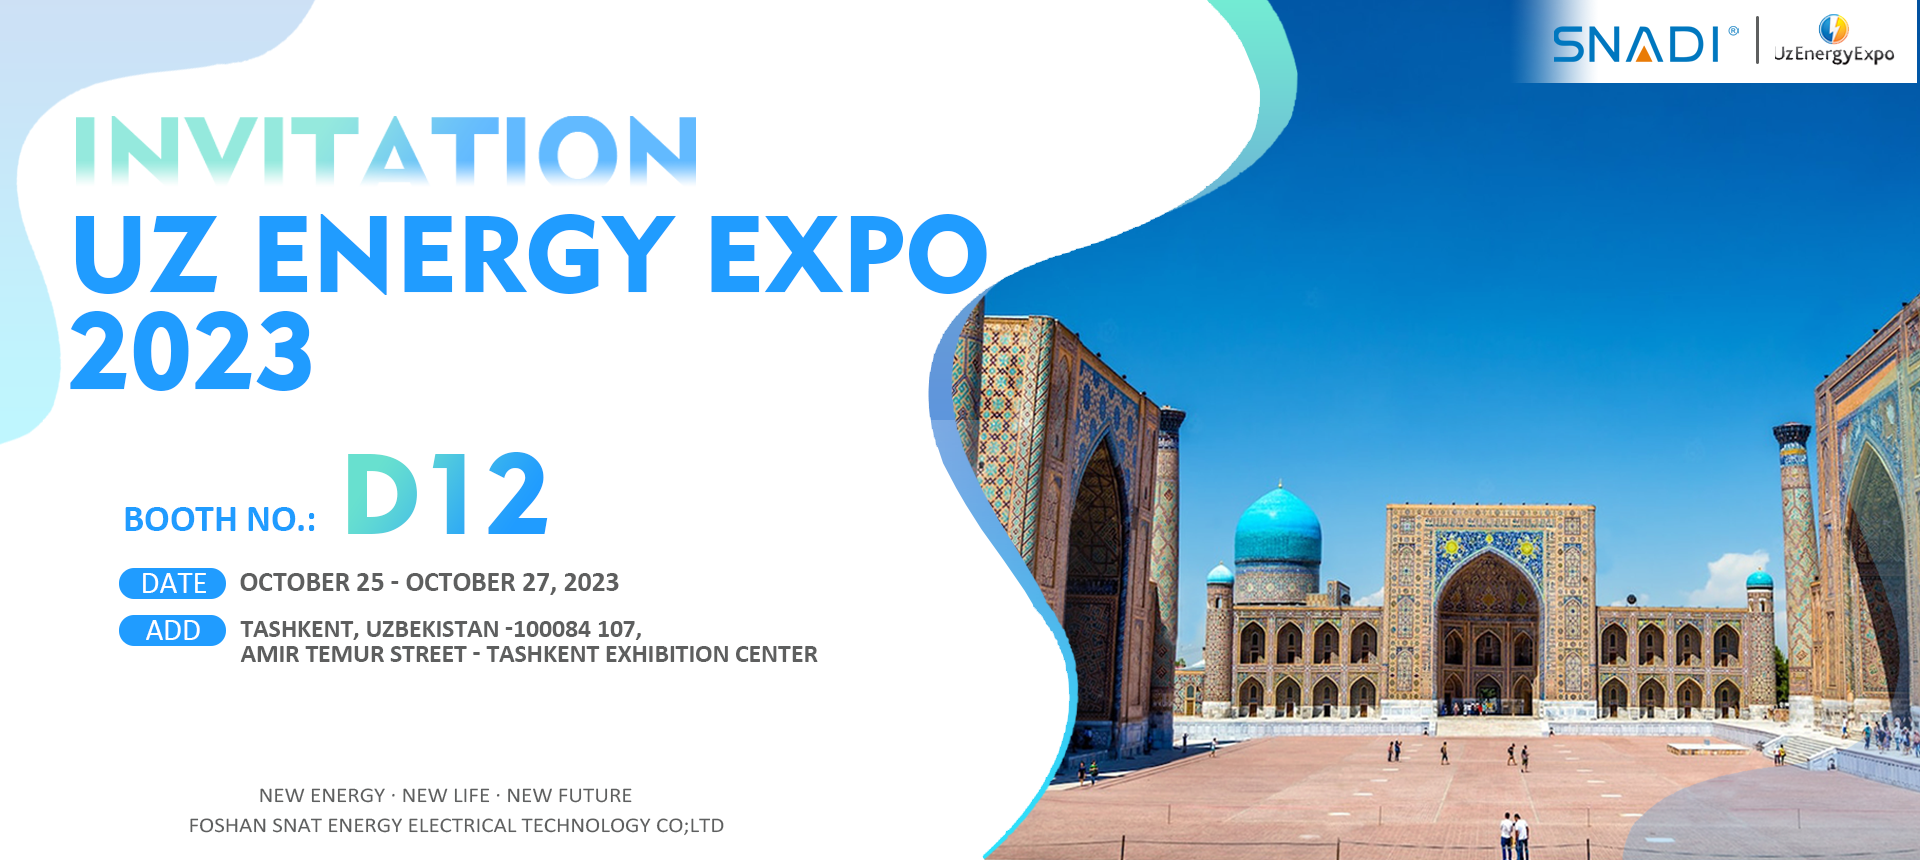 banner_Uz Energy Expo 2023_SNADI.png